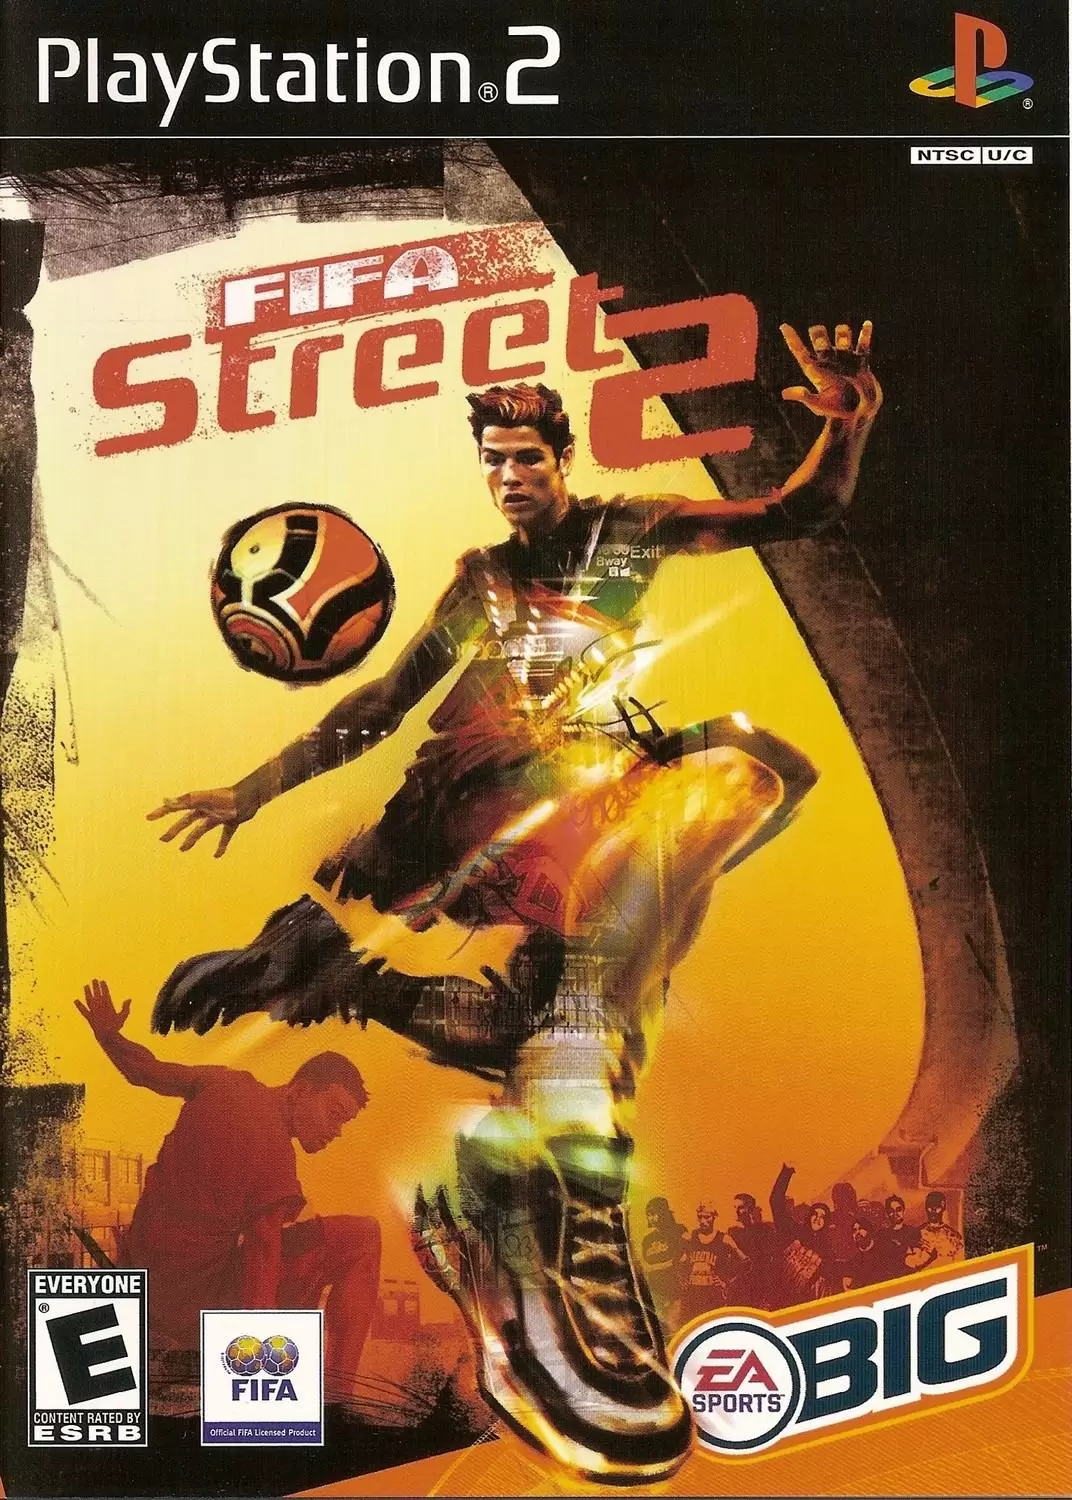 PS2 Games - FIFA Street 2